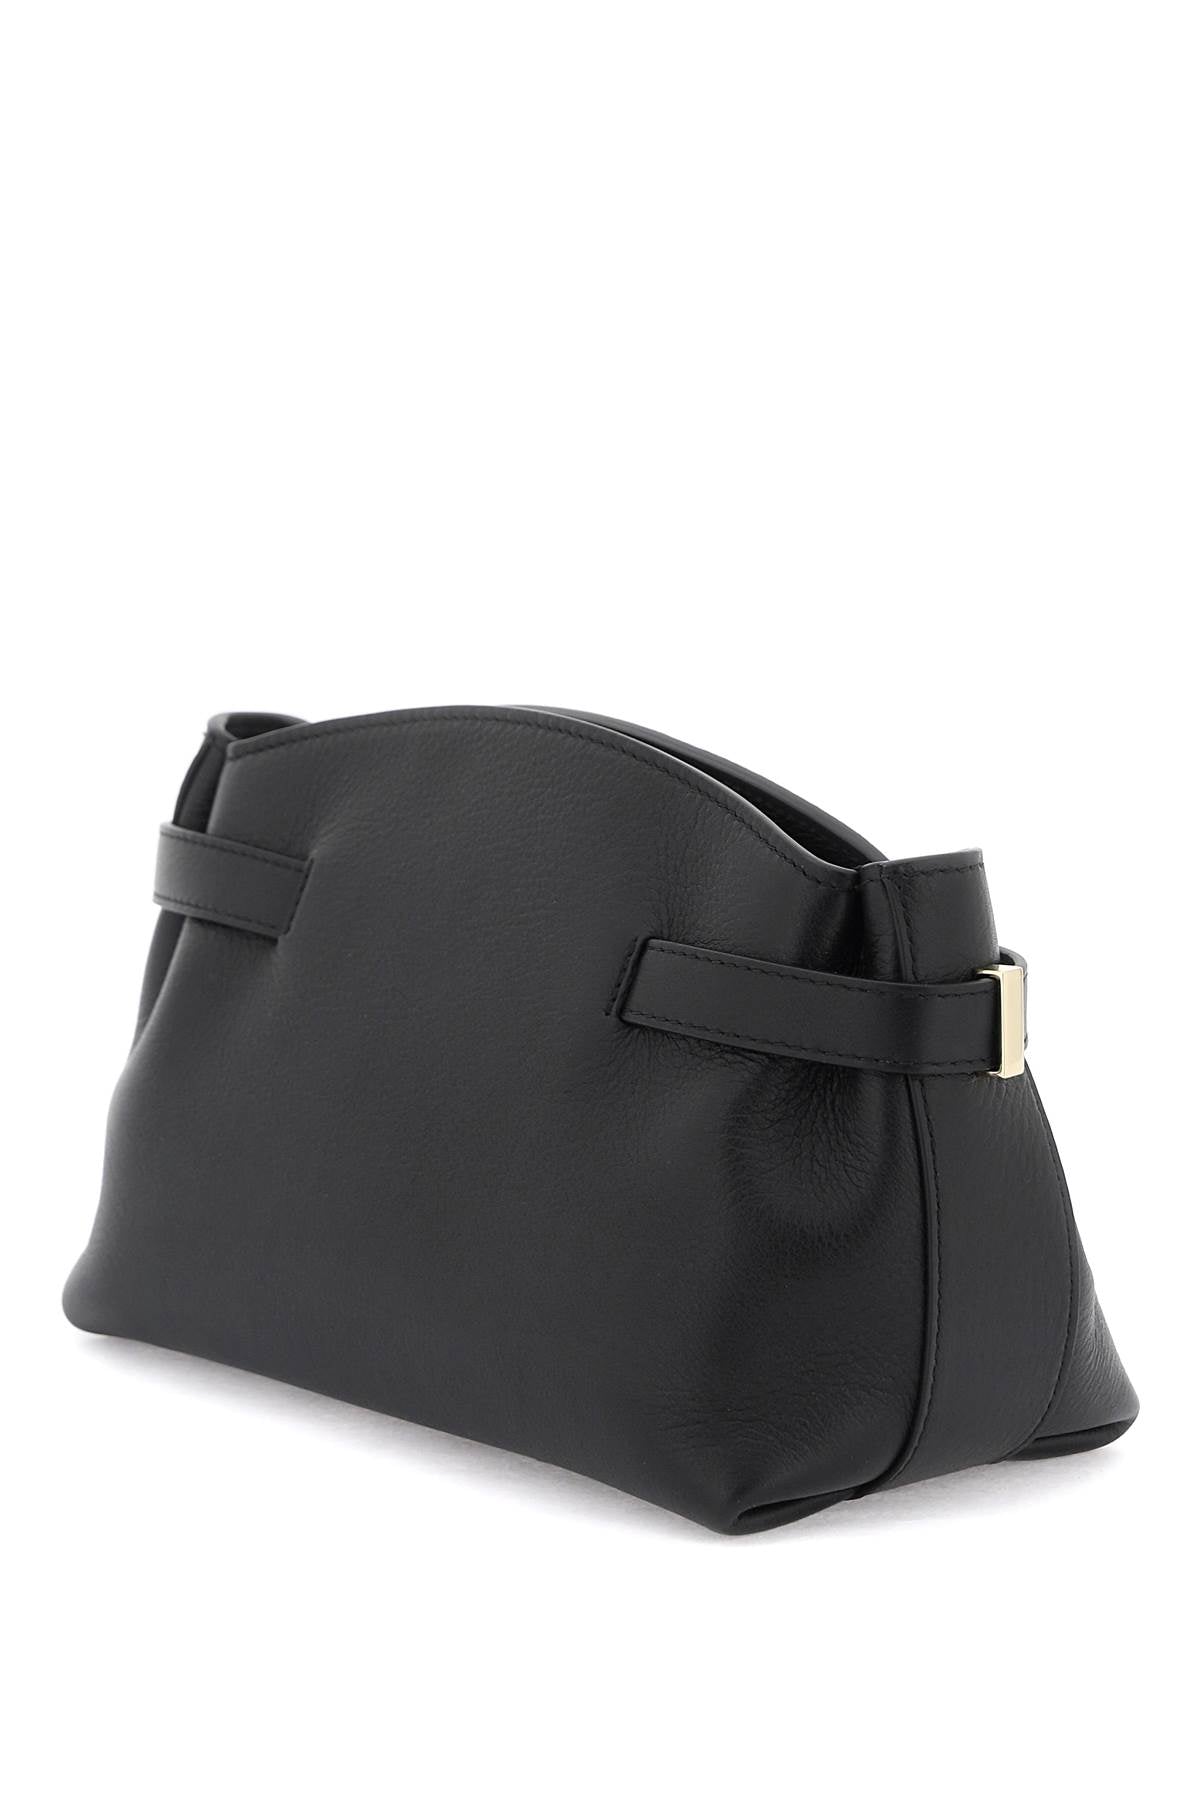 FERRAGAMO Small Hug Black Leather Crossbody Bag with Gold-Tone Gancini Closure and Adjustable Strap